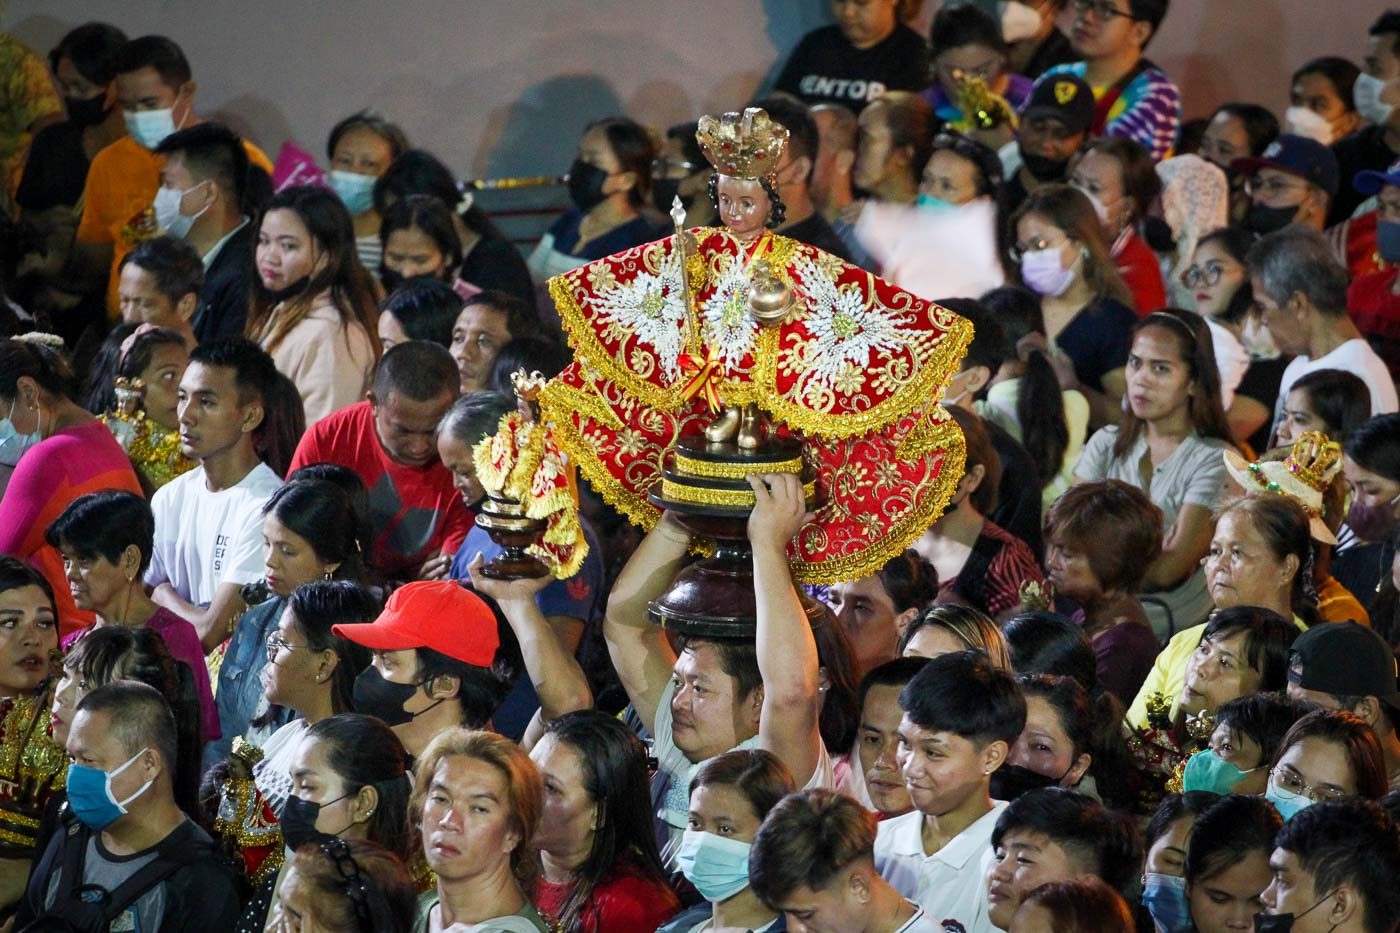 Testament of faith: Devotees celebrate return of in-person Sinulog festivities